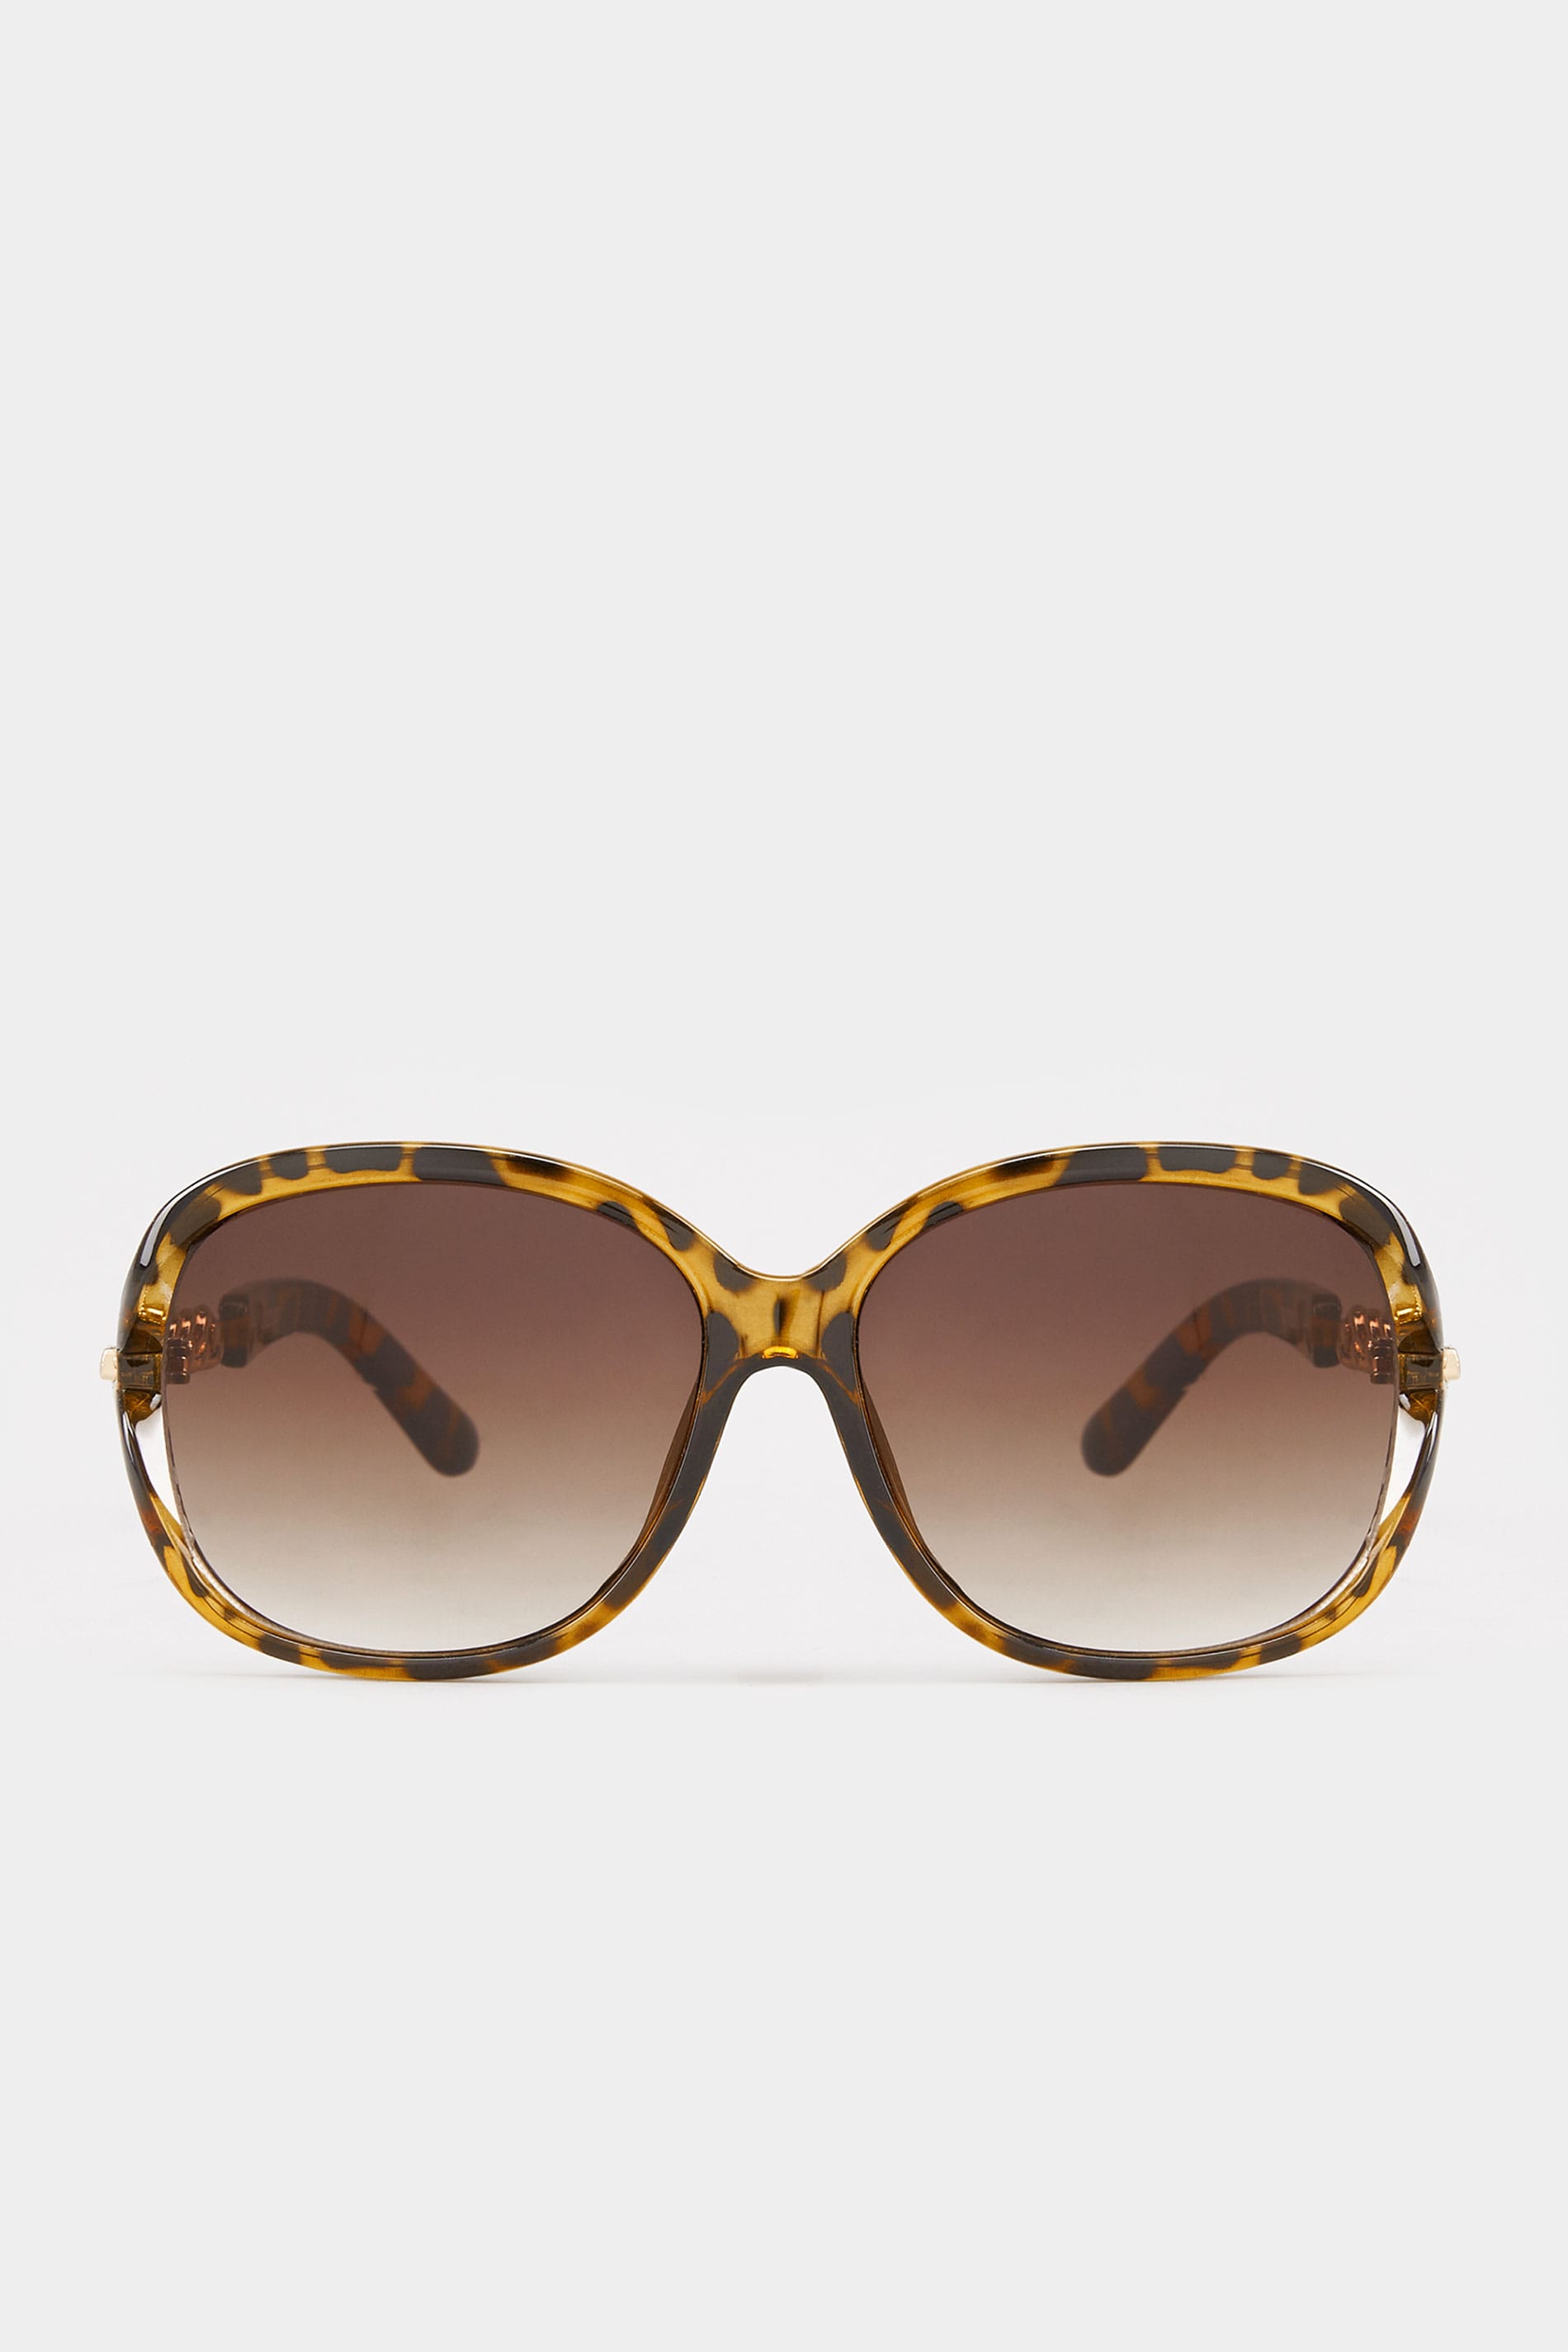 Brown Tortoiseshell Oversized Sunglasses | Yours Clothing